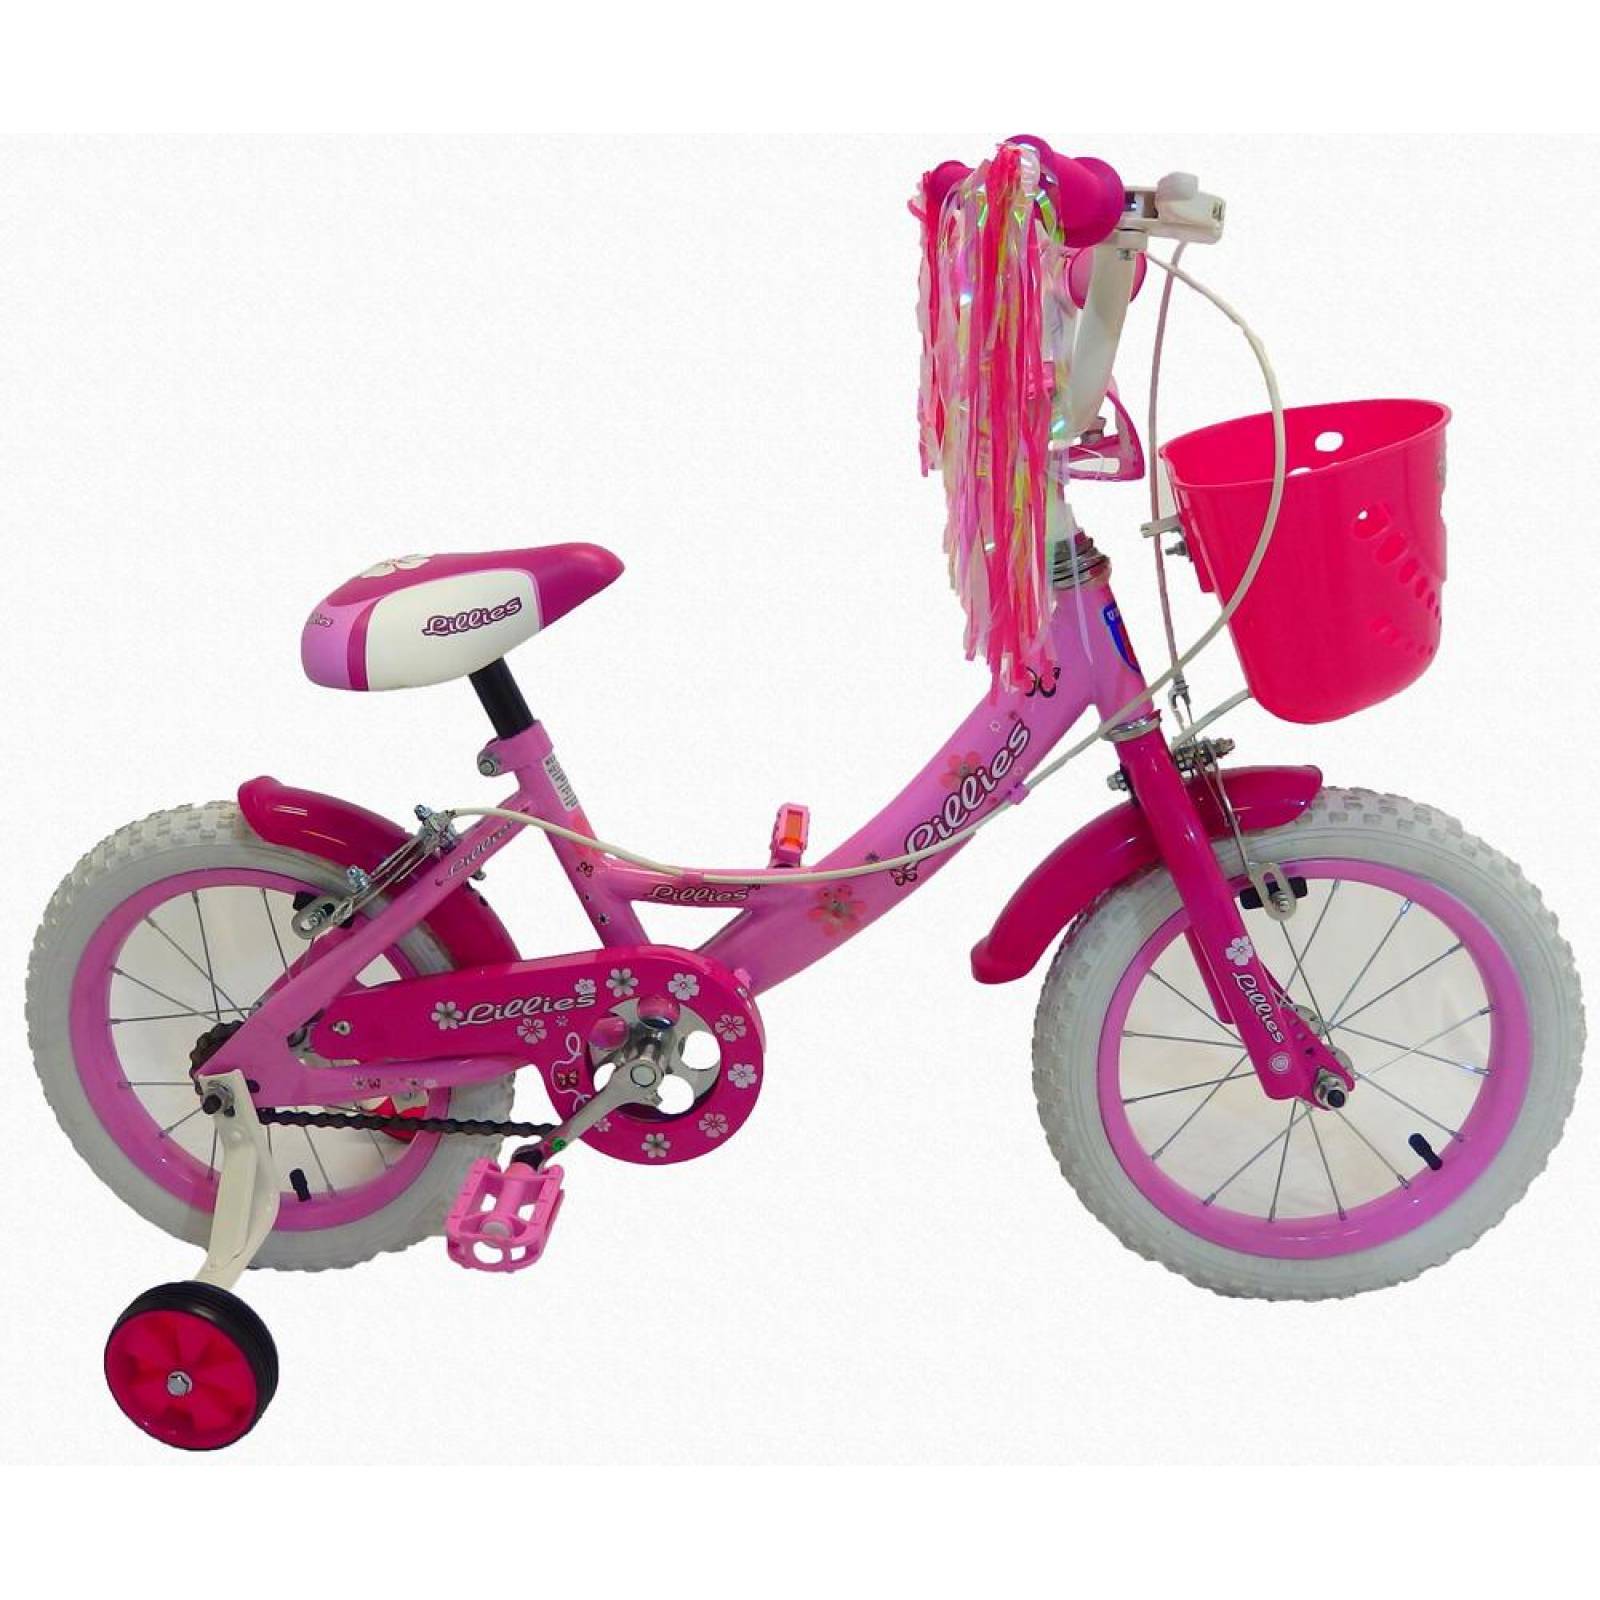 Bicicleta Infantil para niña rodada 12 Rosa  - Fucsia